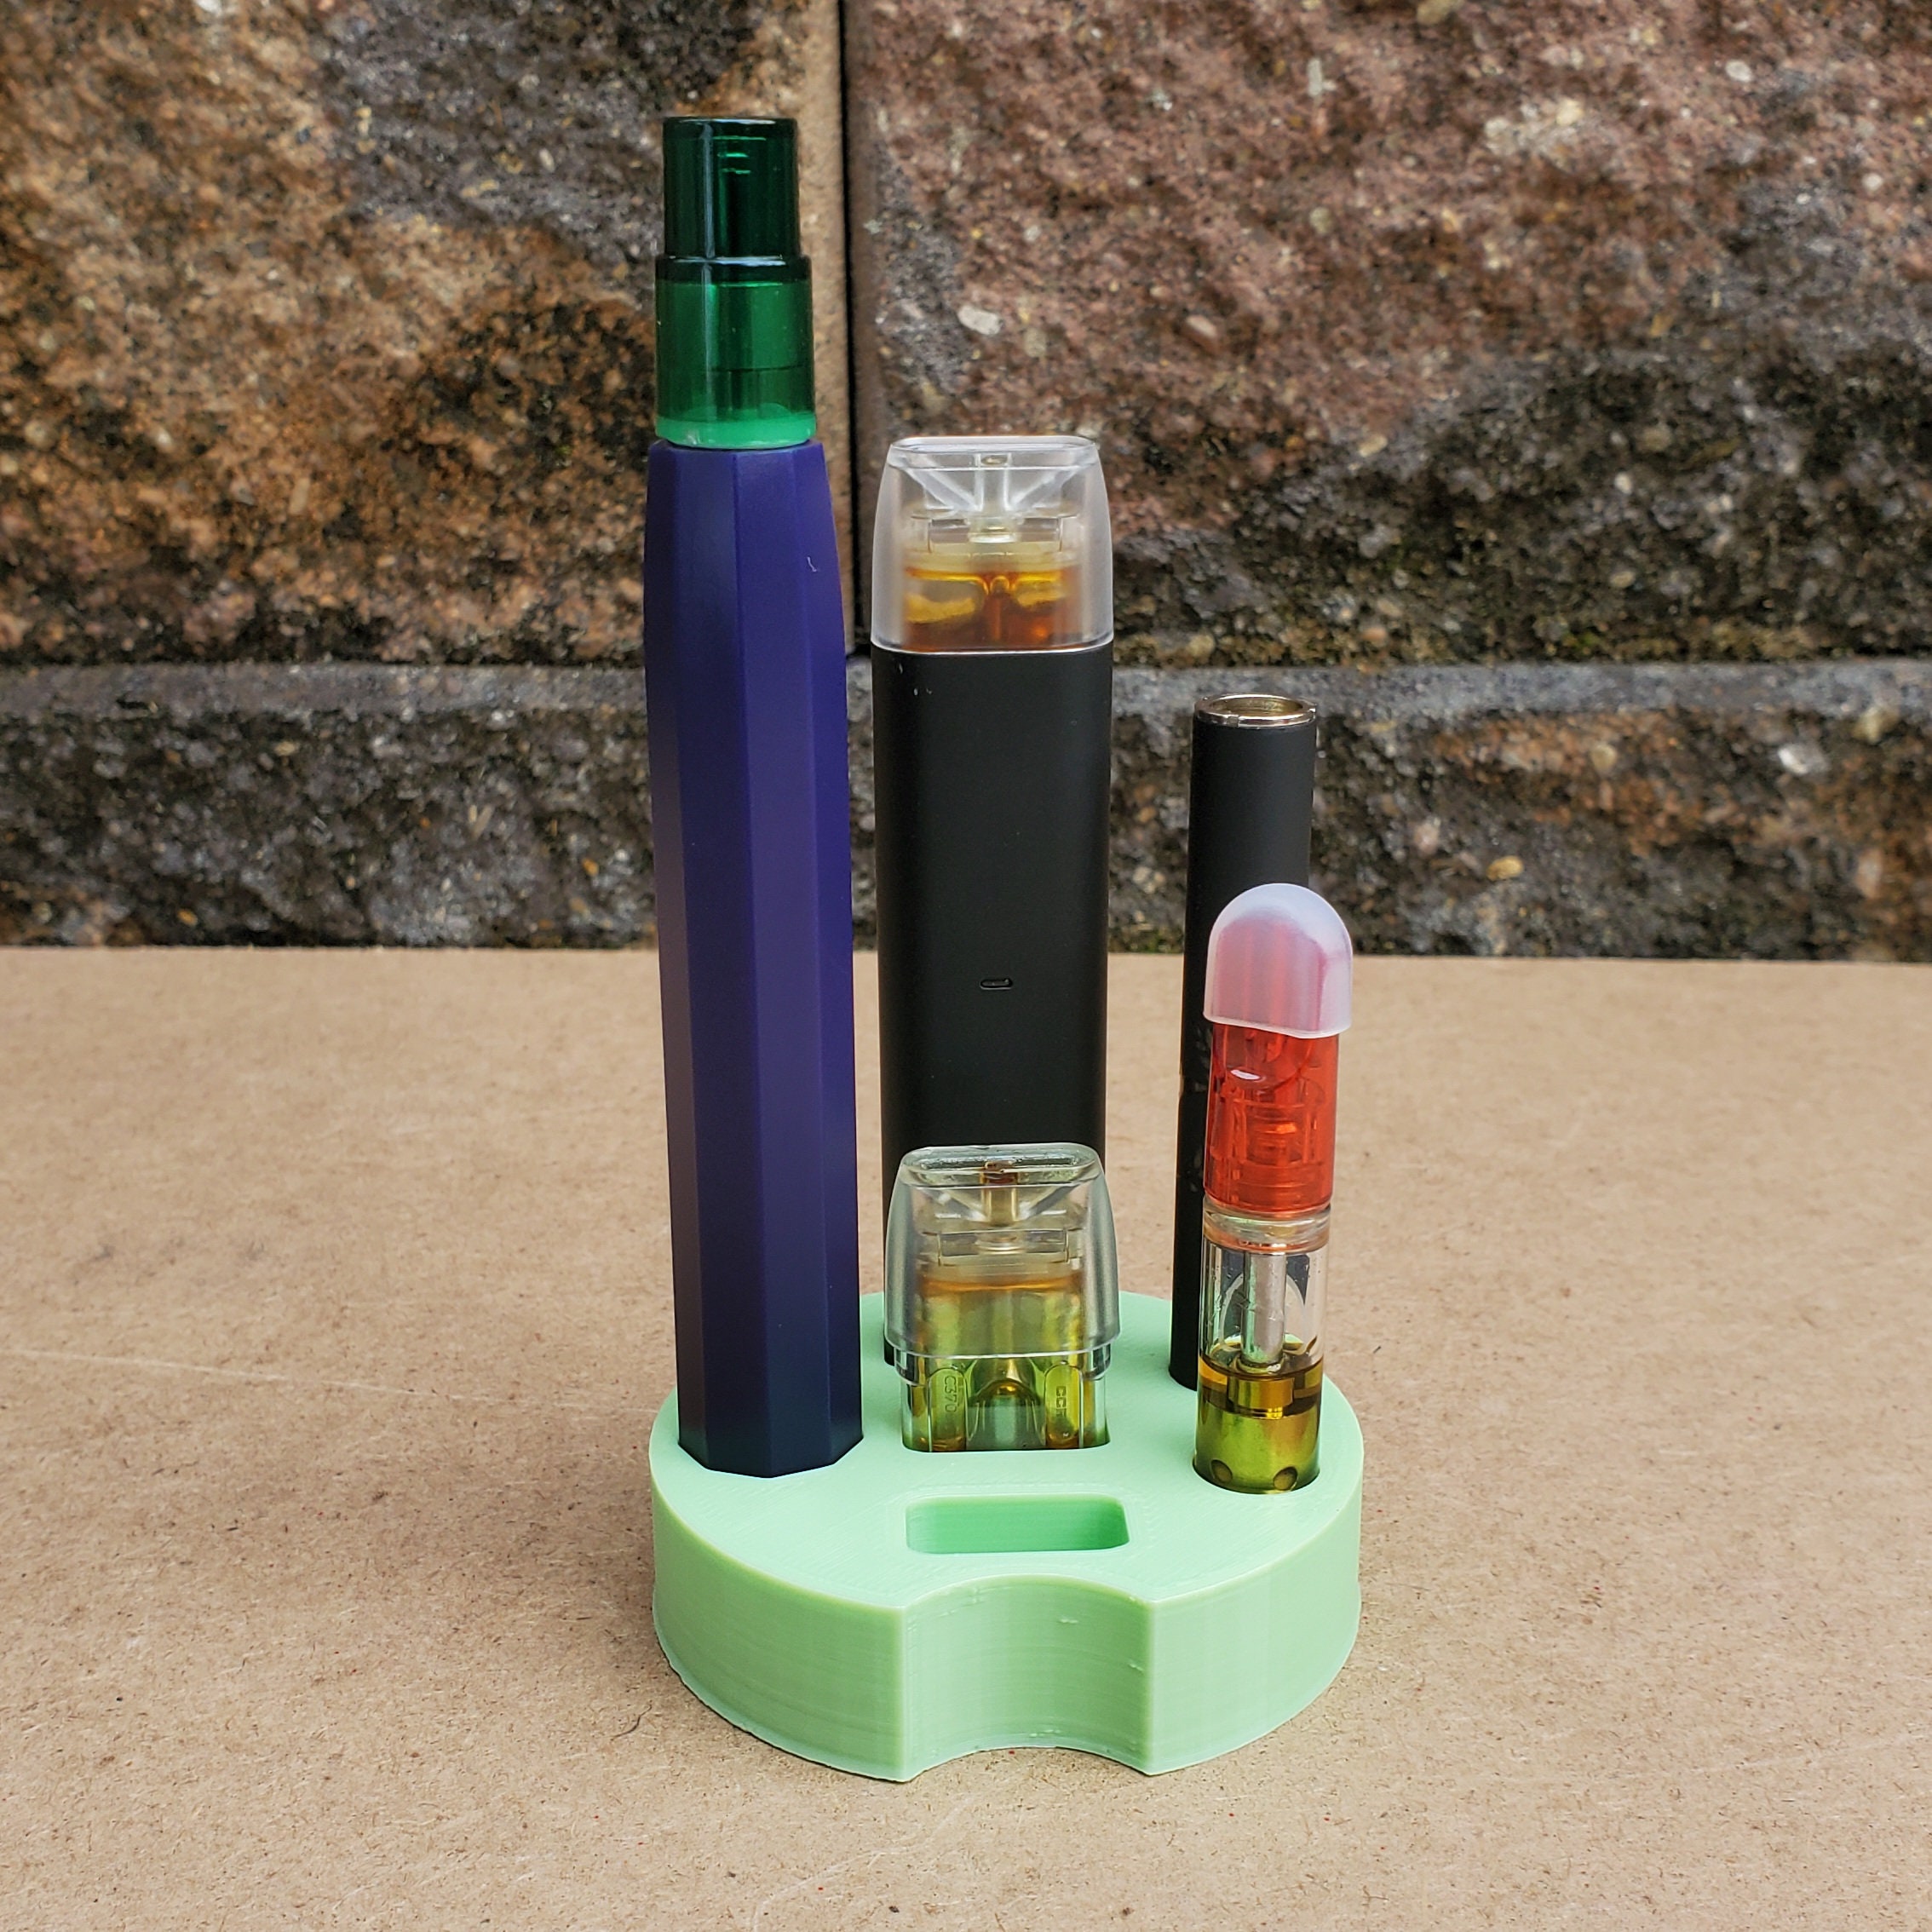 Acrylic Display Stand Shelf Holder Base Vape Rack Show For Disposable Vaporizer  Vape Pen Battery And Pods Cartridge Kit DHL From Alexstore, $2.32